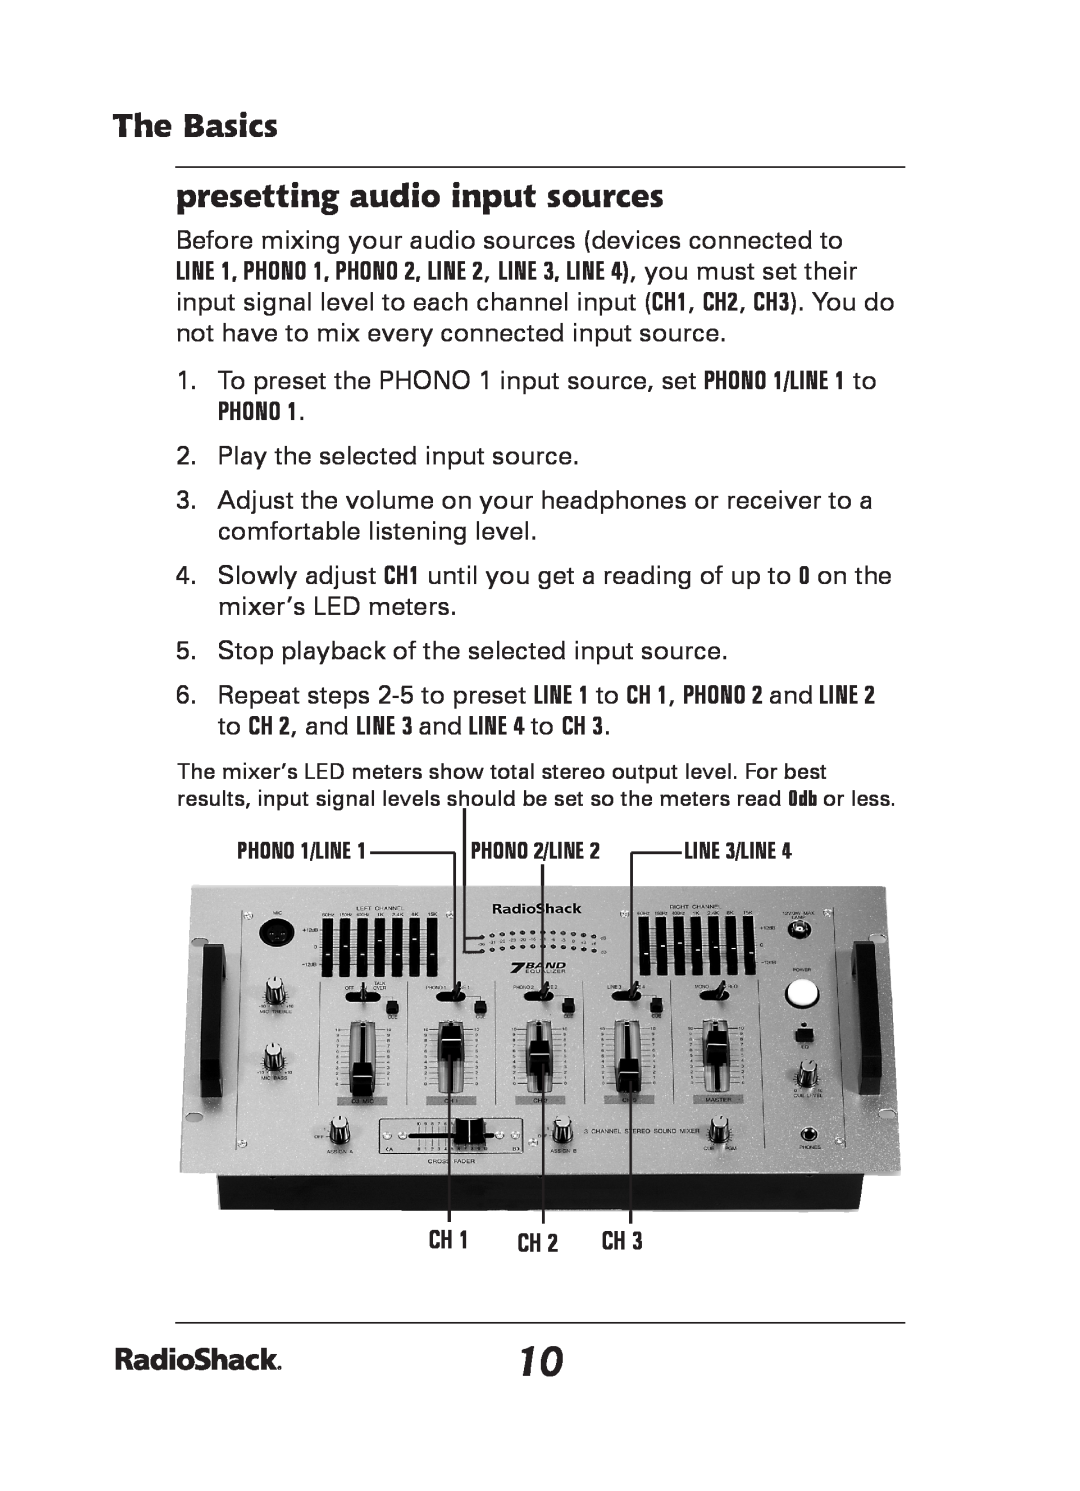 Radio Shack 32-2057 quick start The Basics presetting audio input sources 